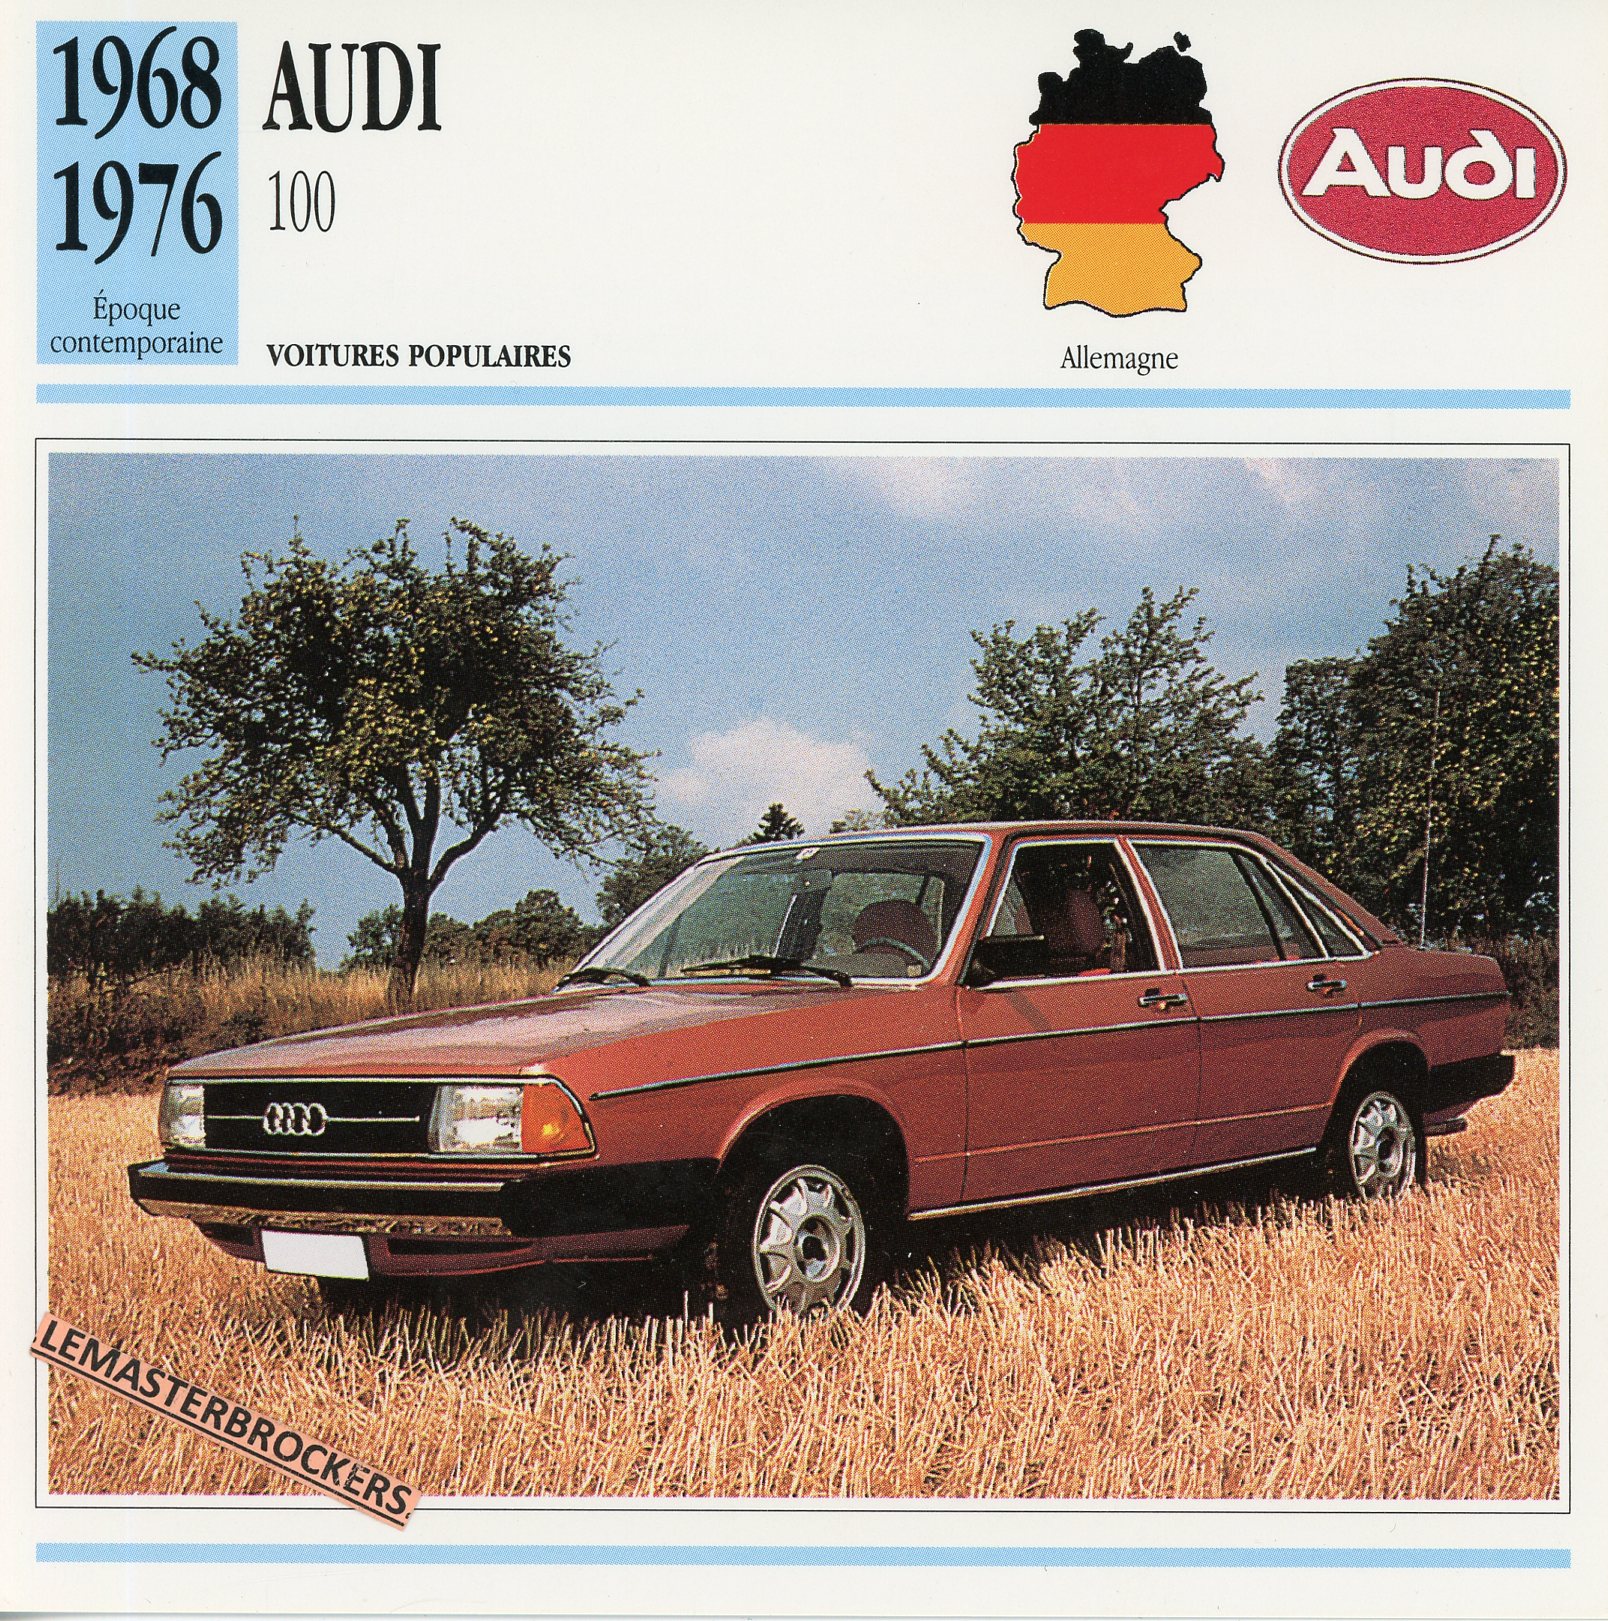 FICHE-AUDI-100-1968-1976-LEMASTERBROCKERS-FICHE-AUTO-CARS-CARD-ATLAS-FRENCH